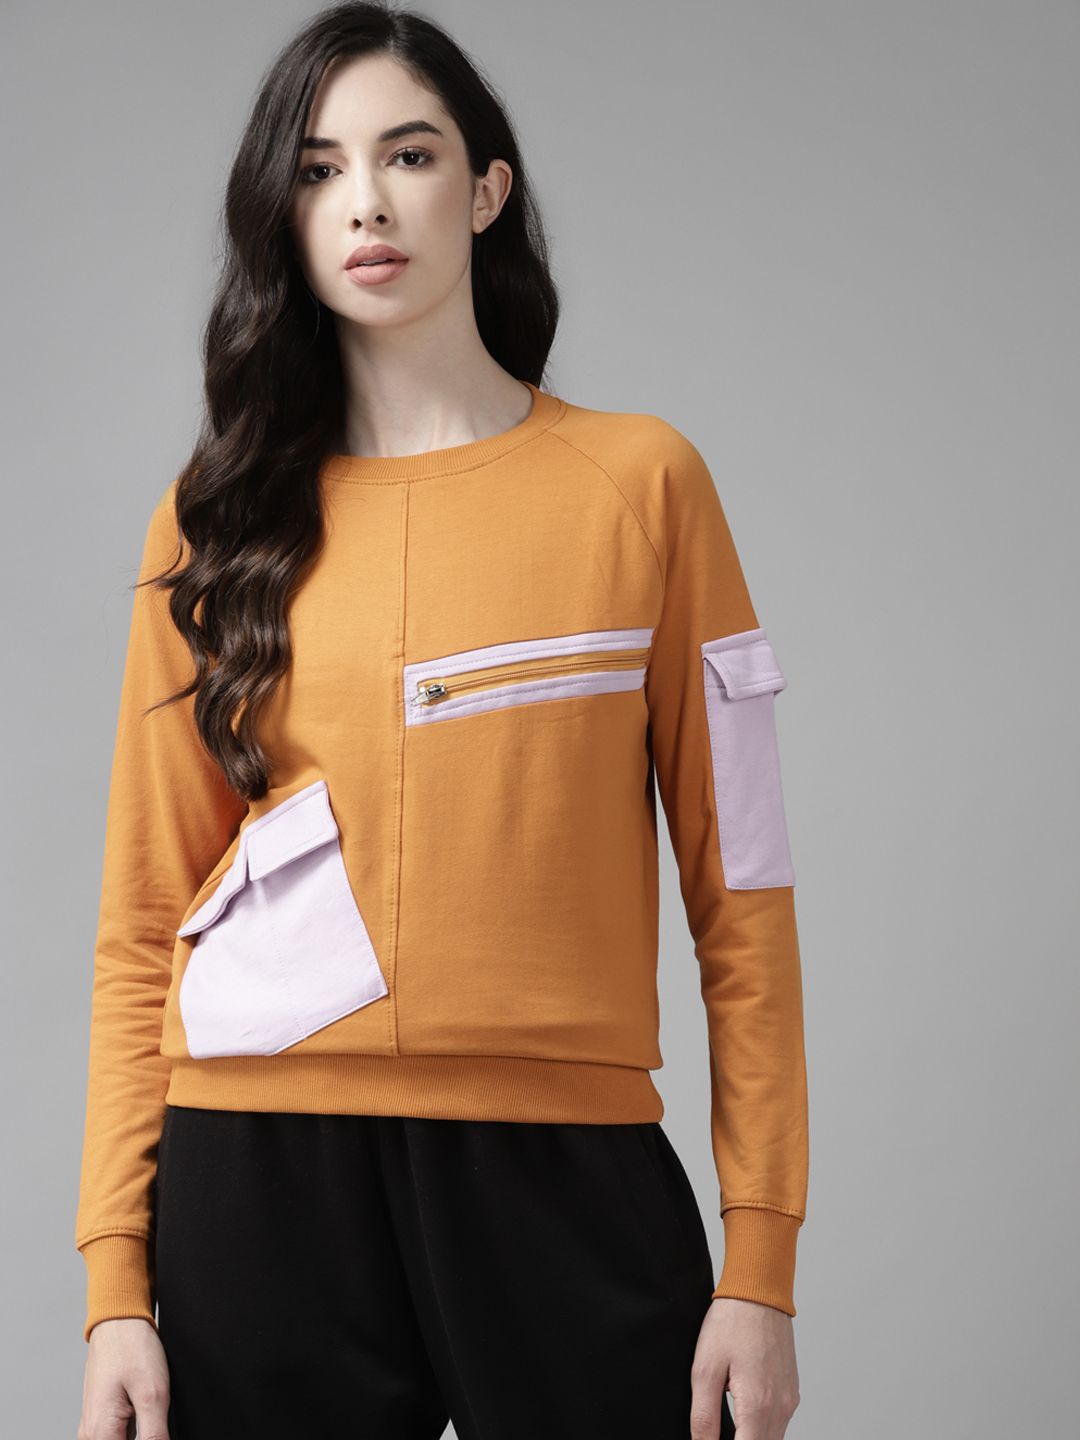 The Dry State Women Rust Orange & Purple Colourblocked Sweatshirt Price in India